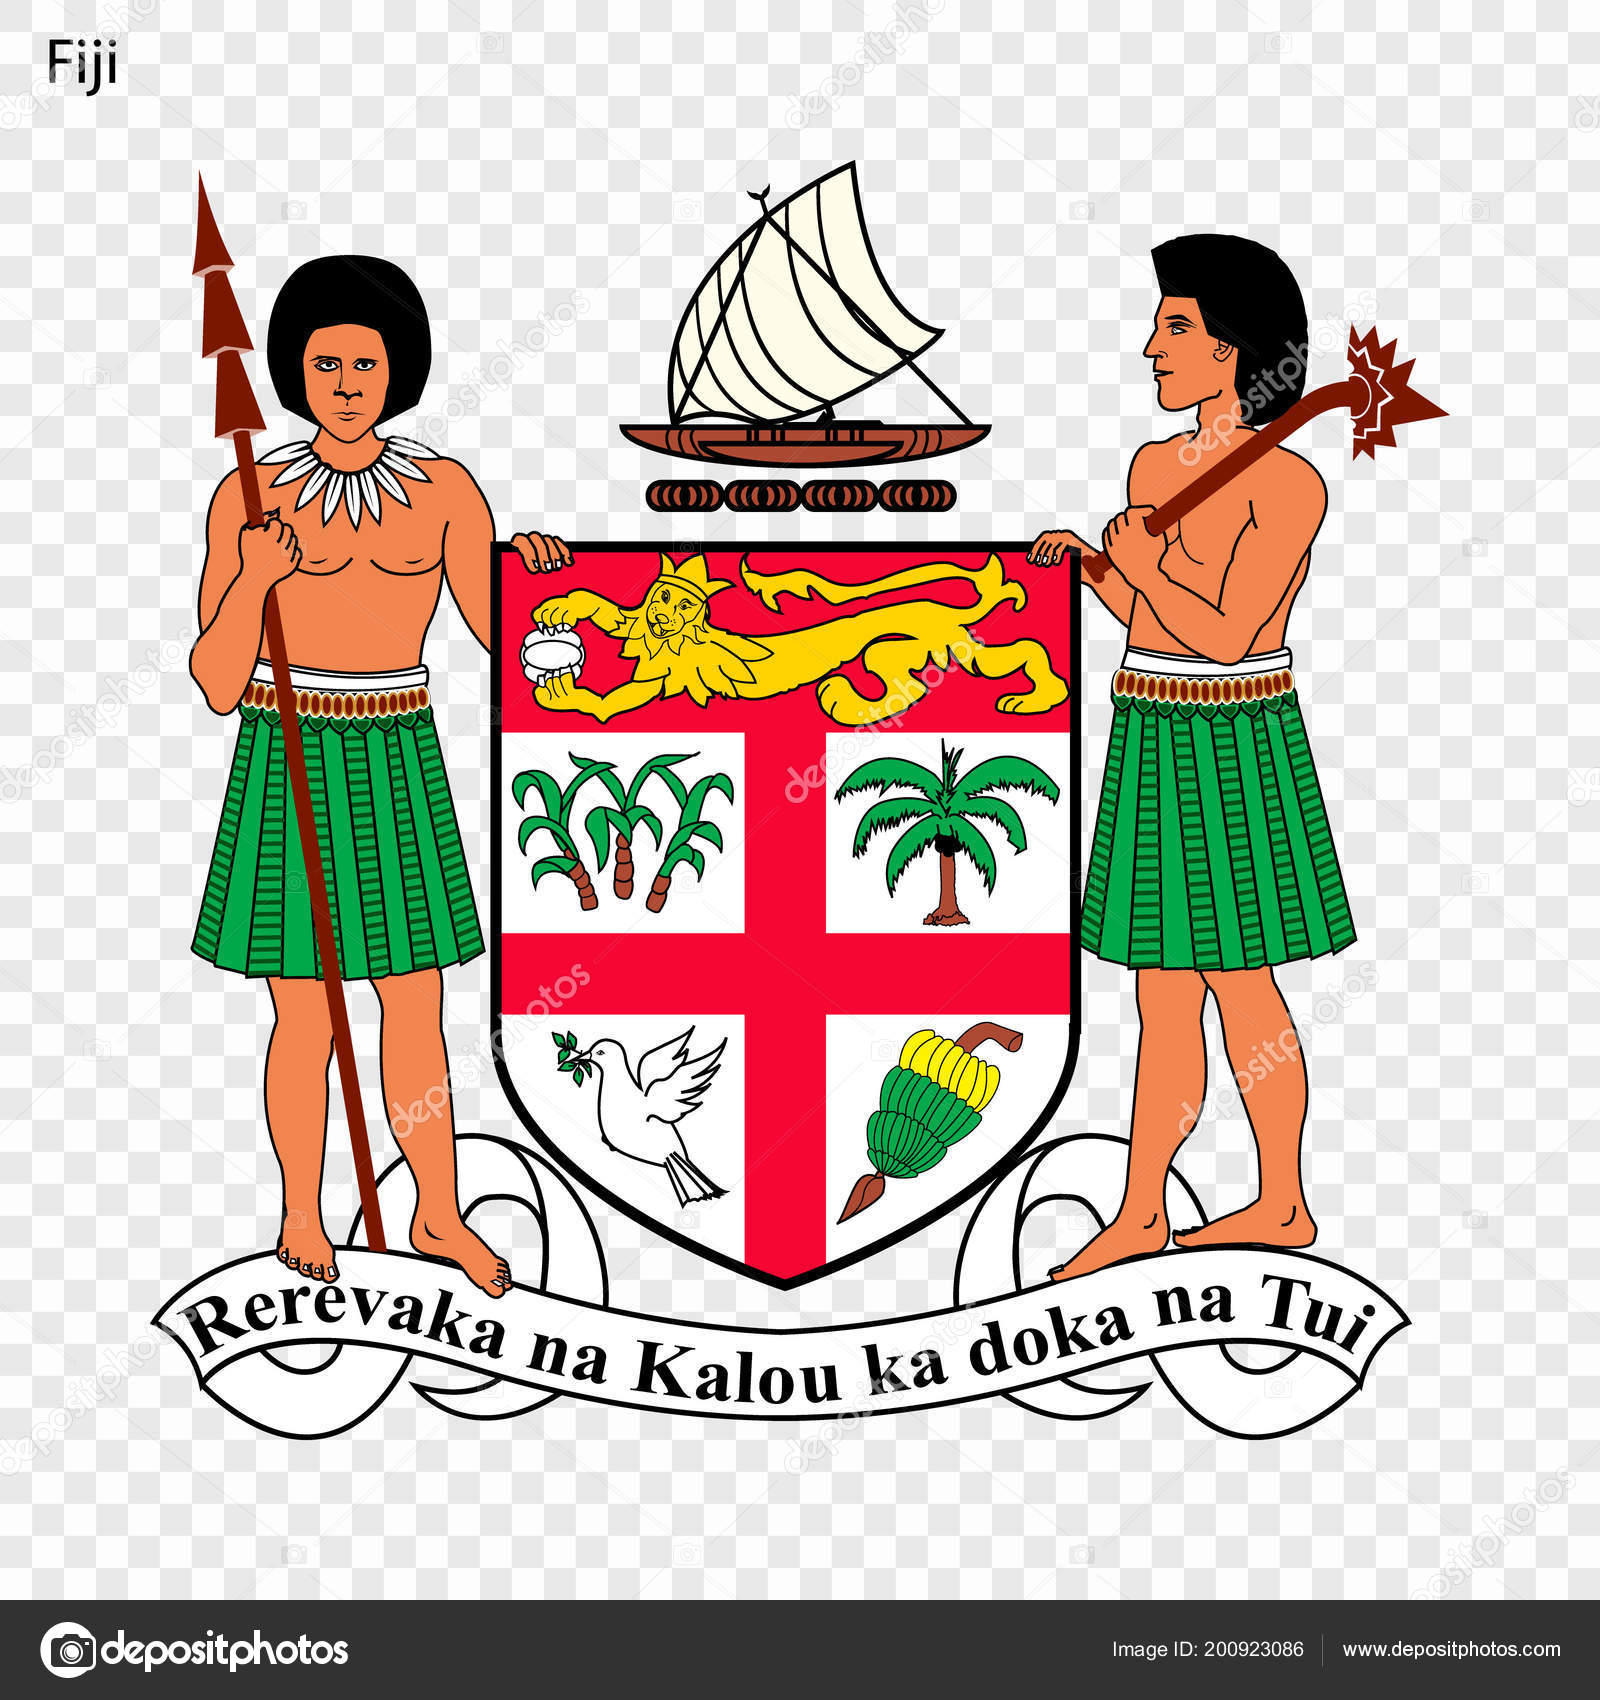 Fiji Symbols